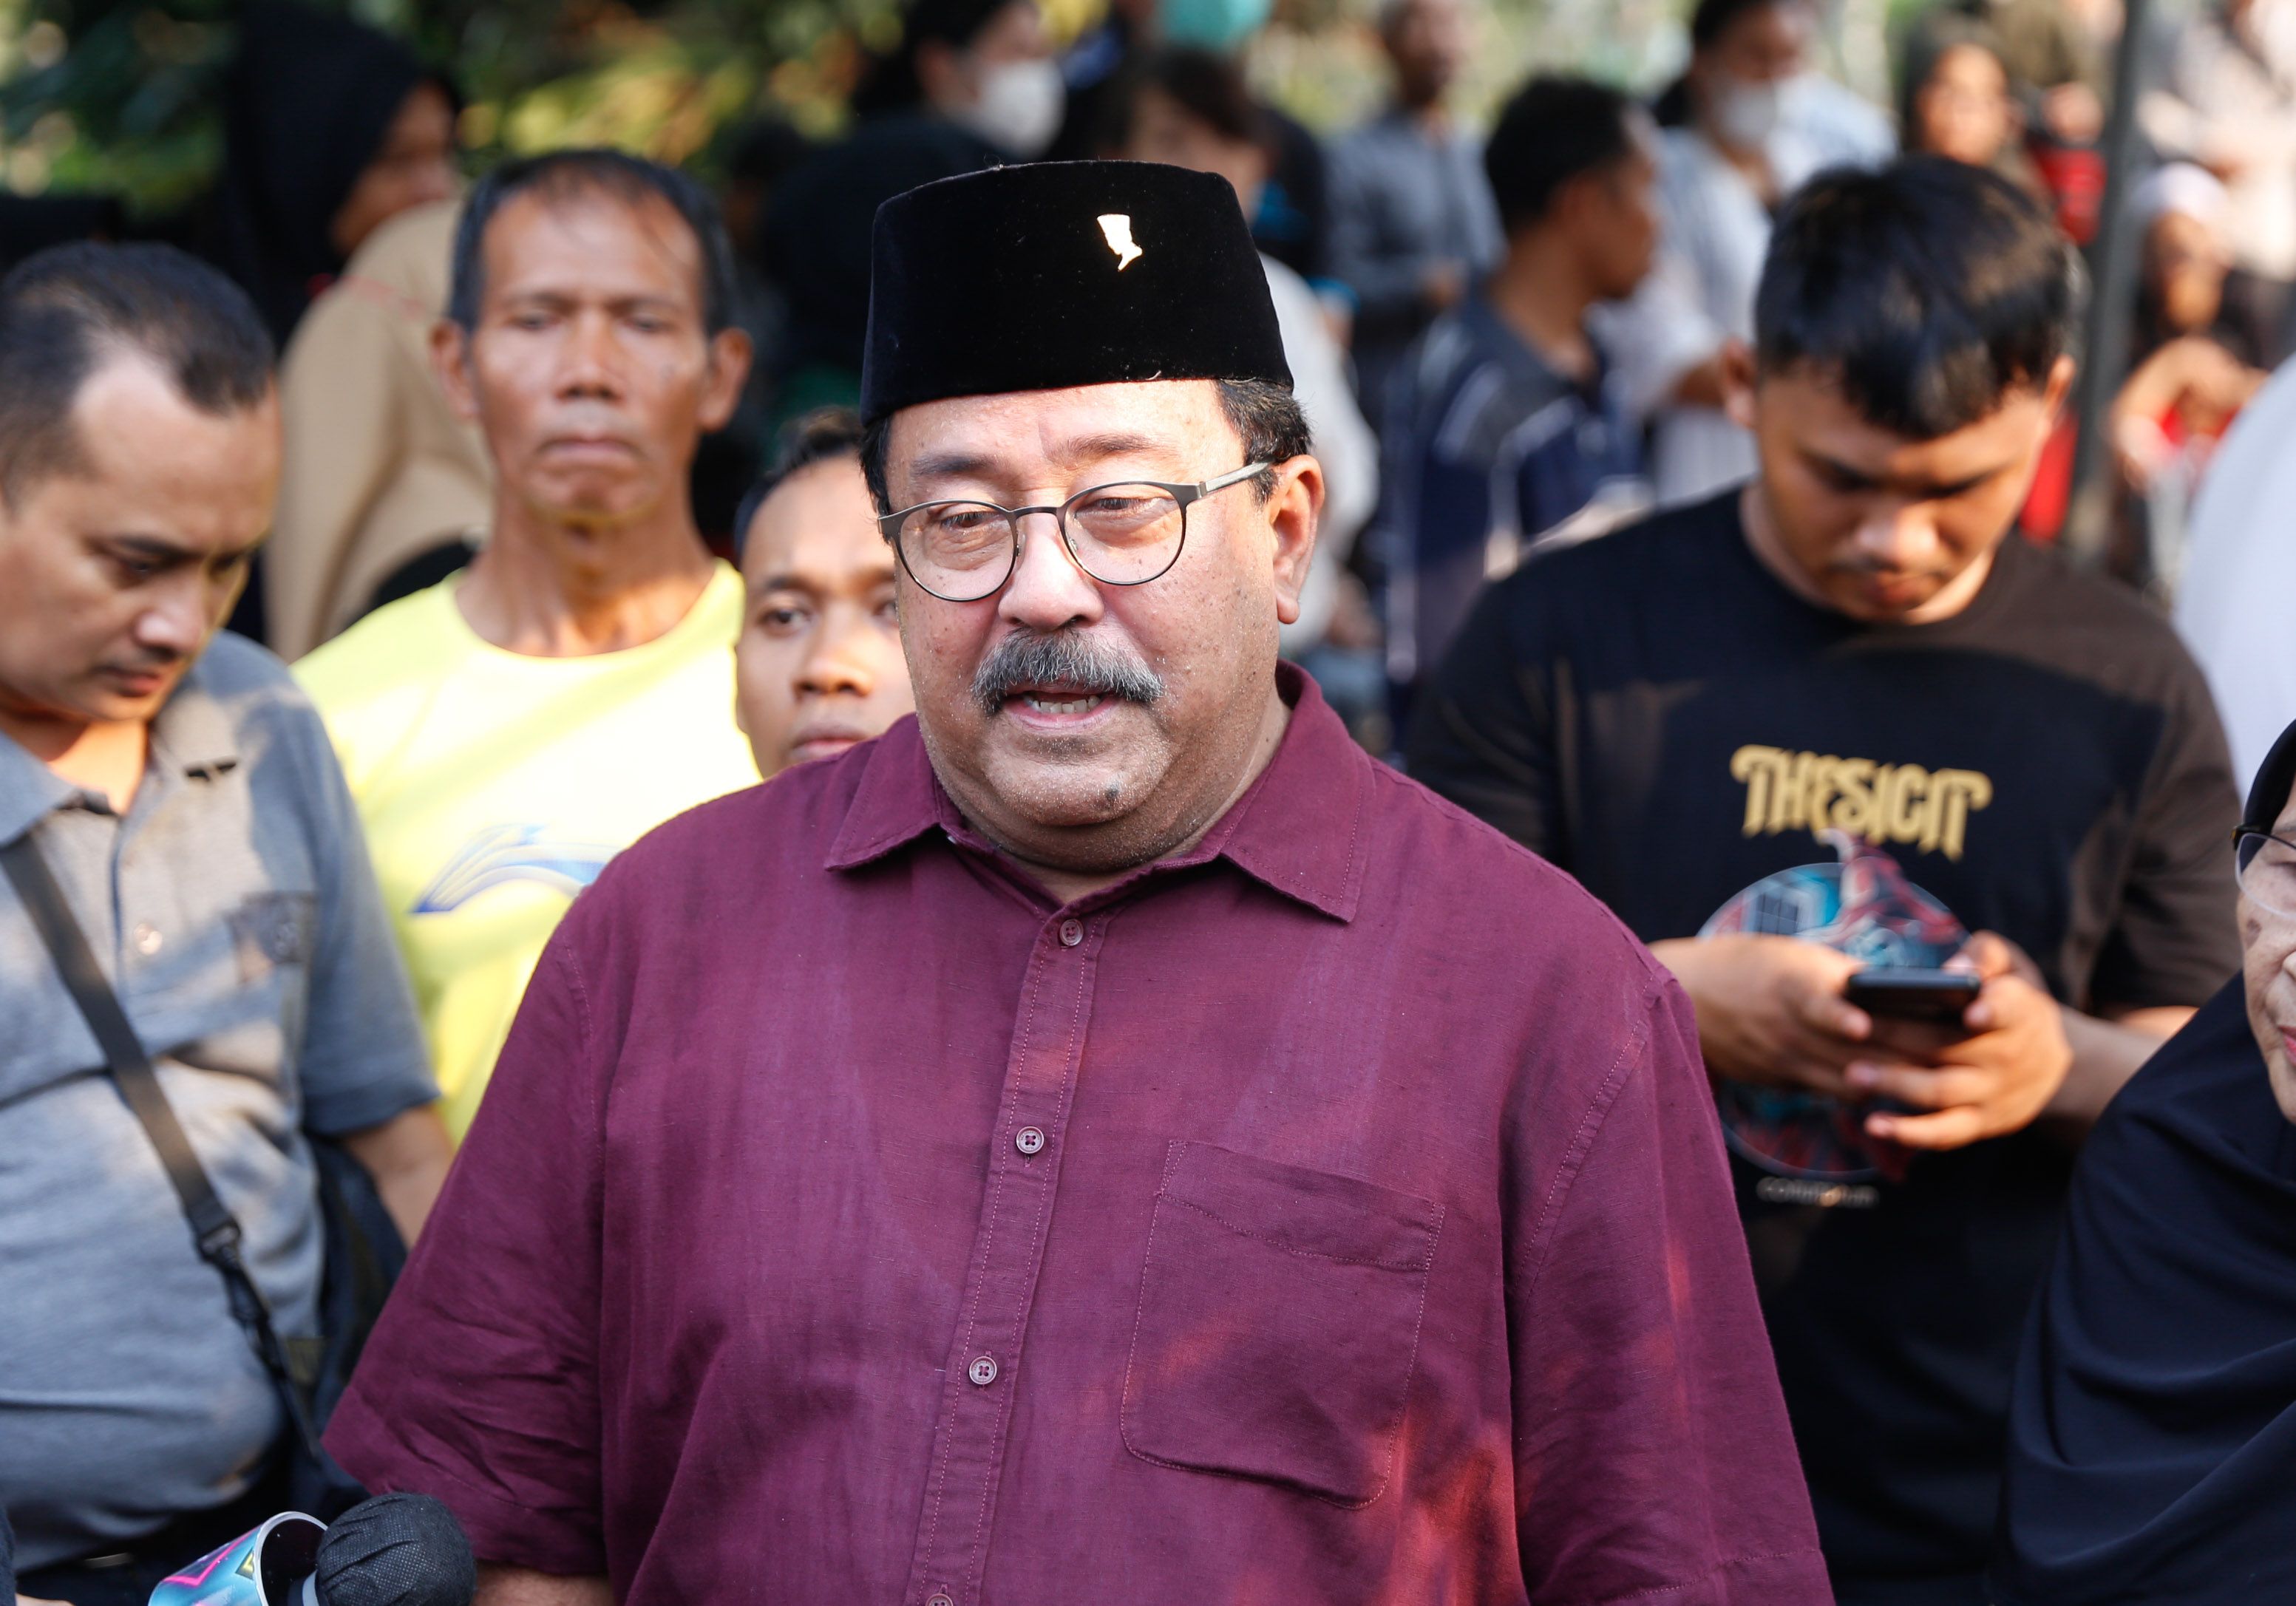 Kembali Lolos ke Senayan, Rano Karno: Terima kasih Masyarakat Tangerang Raya